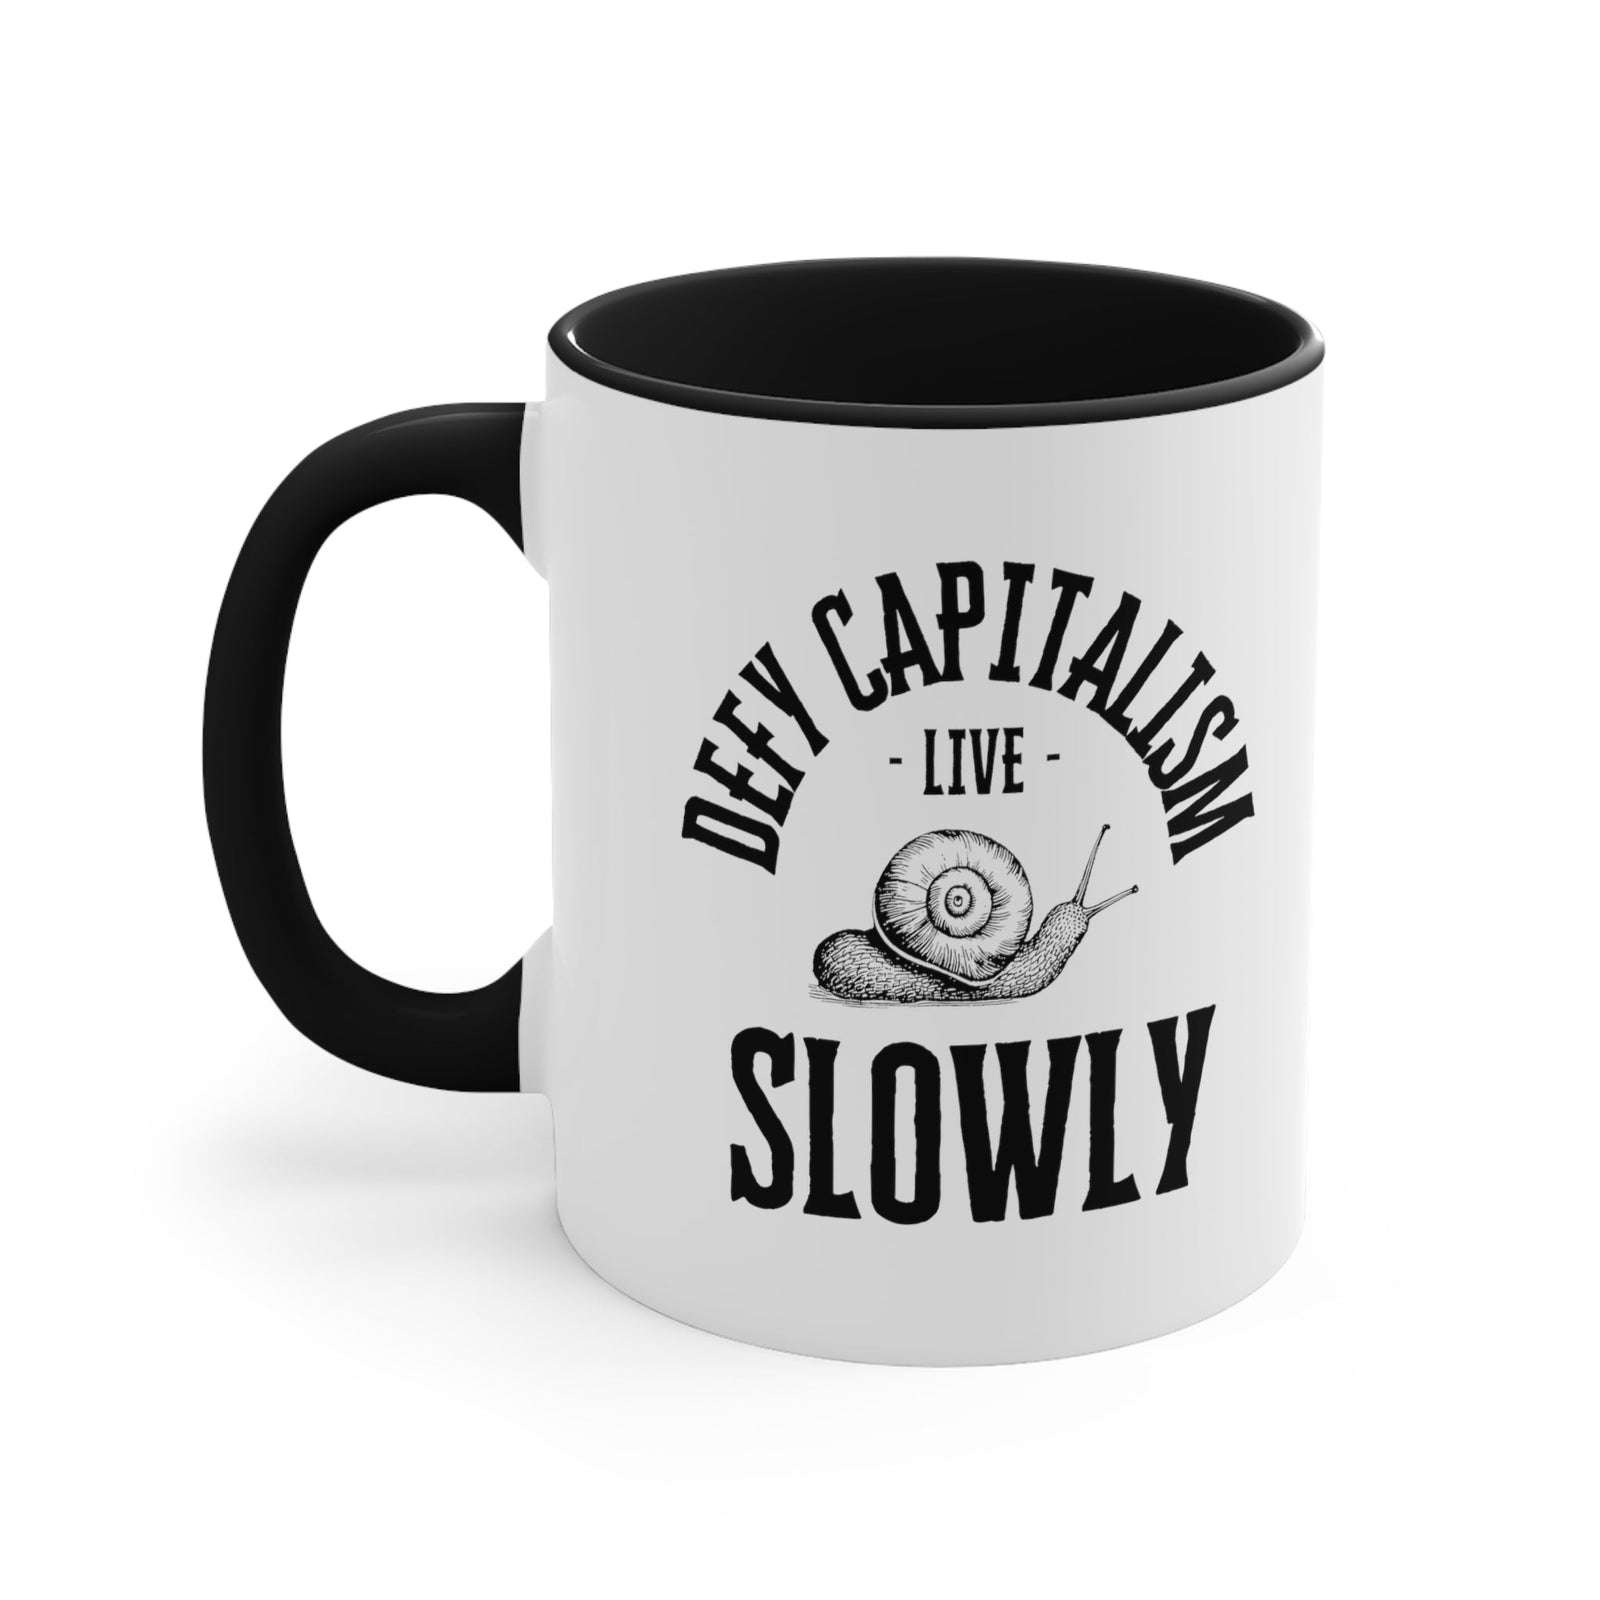 Defy Capitalism Live Slowly Accent Coffee Mug, 11oz